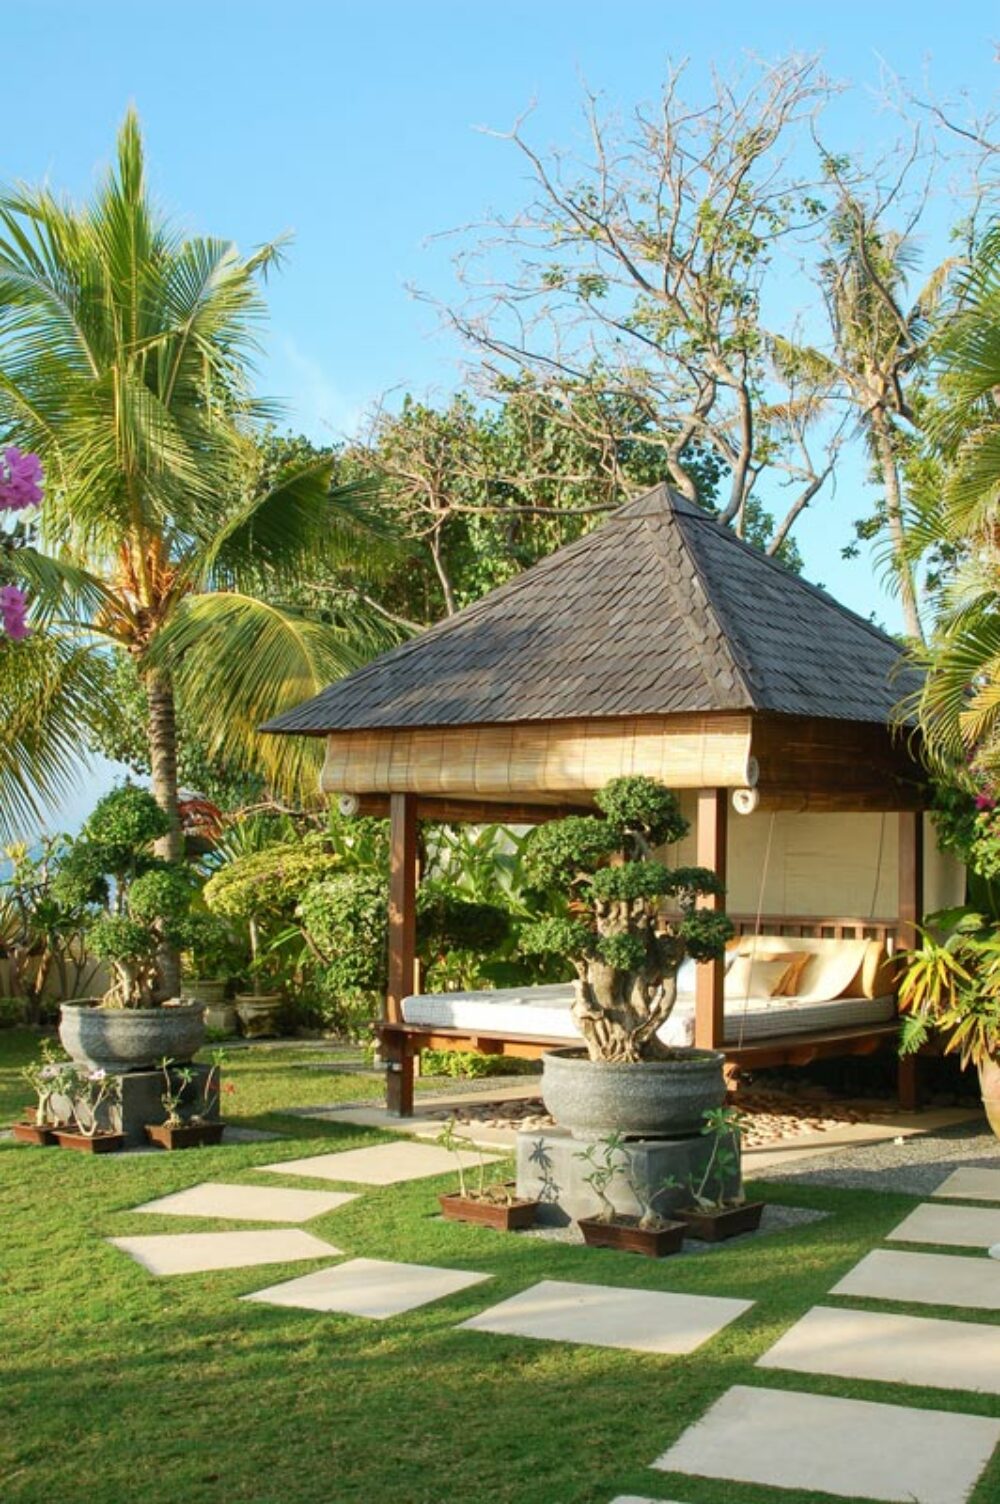 Hotel Bali Lovina Frangipani Beach Villa Resort